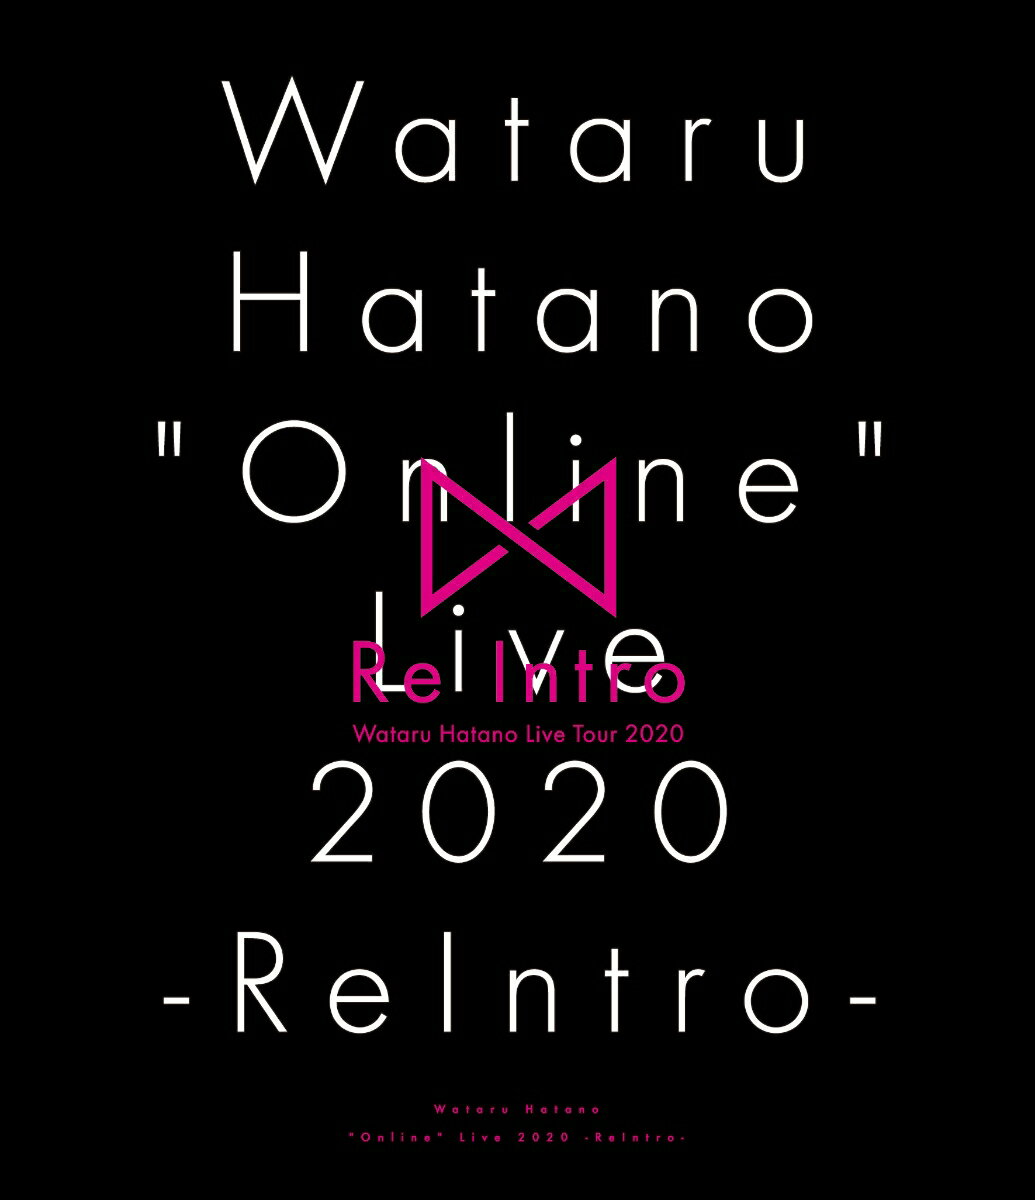 Wataru Hatano ”Online” Live 2020 Re Intro Live BD【Blu-ray】